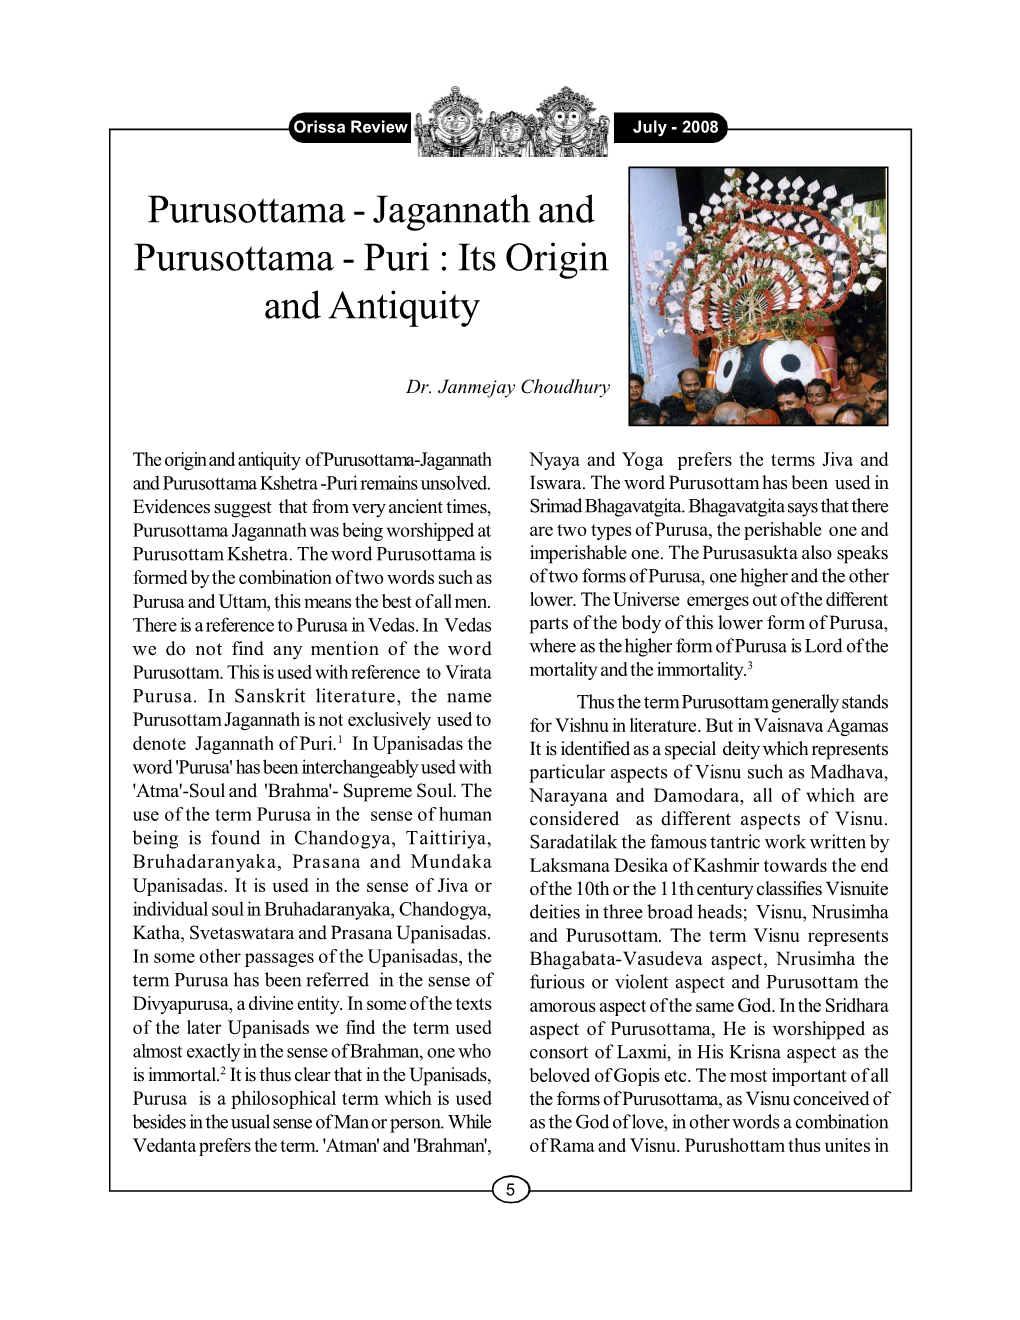 Purusottama - Jagannath and Purusottama - Puri : Its Origin and Antiquity